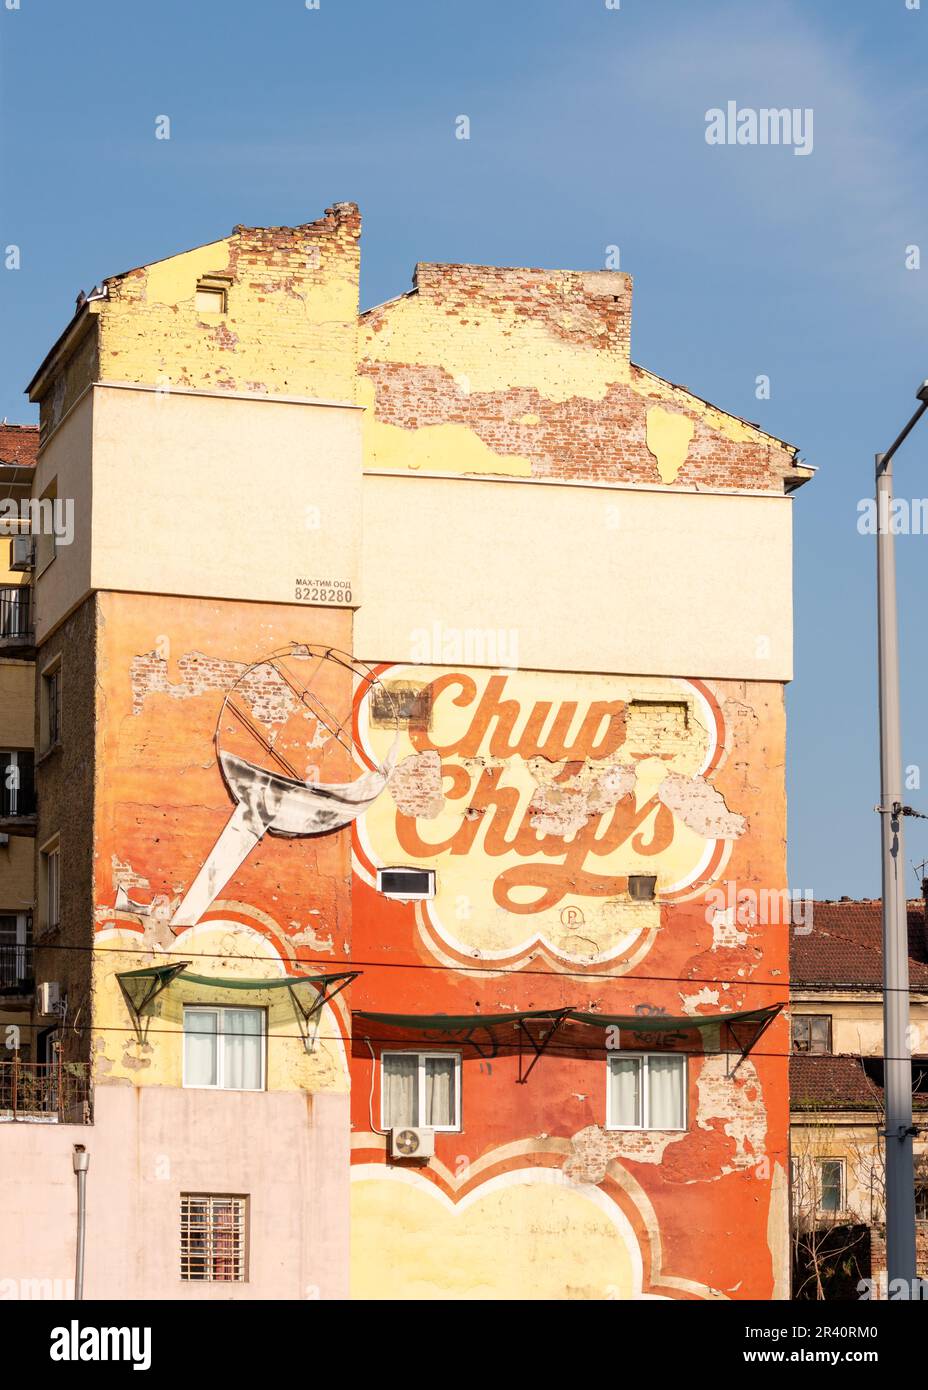 Street Art Wandbild verblasste alte Chupa Chups Wandwerbung auf verwitterten Fassadenwänden von Wohngebäuden in Sofia, Bulgarien, Osteuropa, Balkan, EU Stockfoto